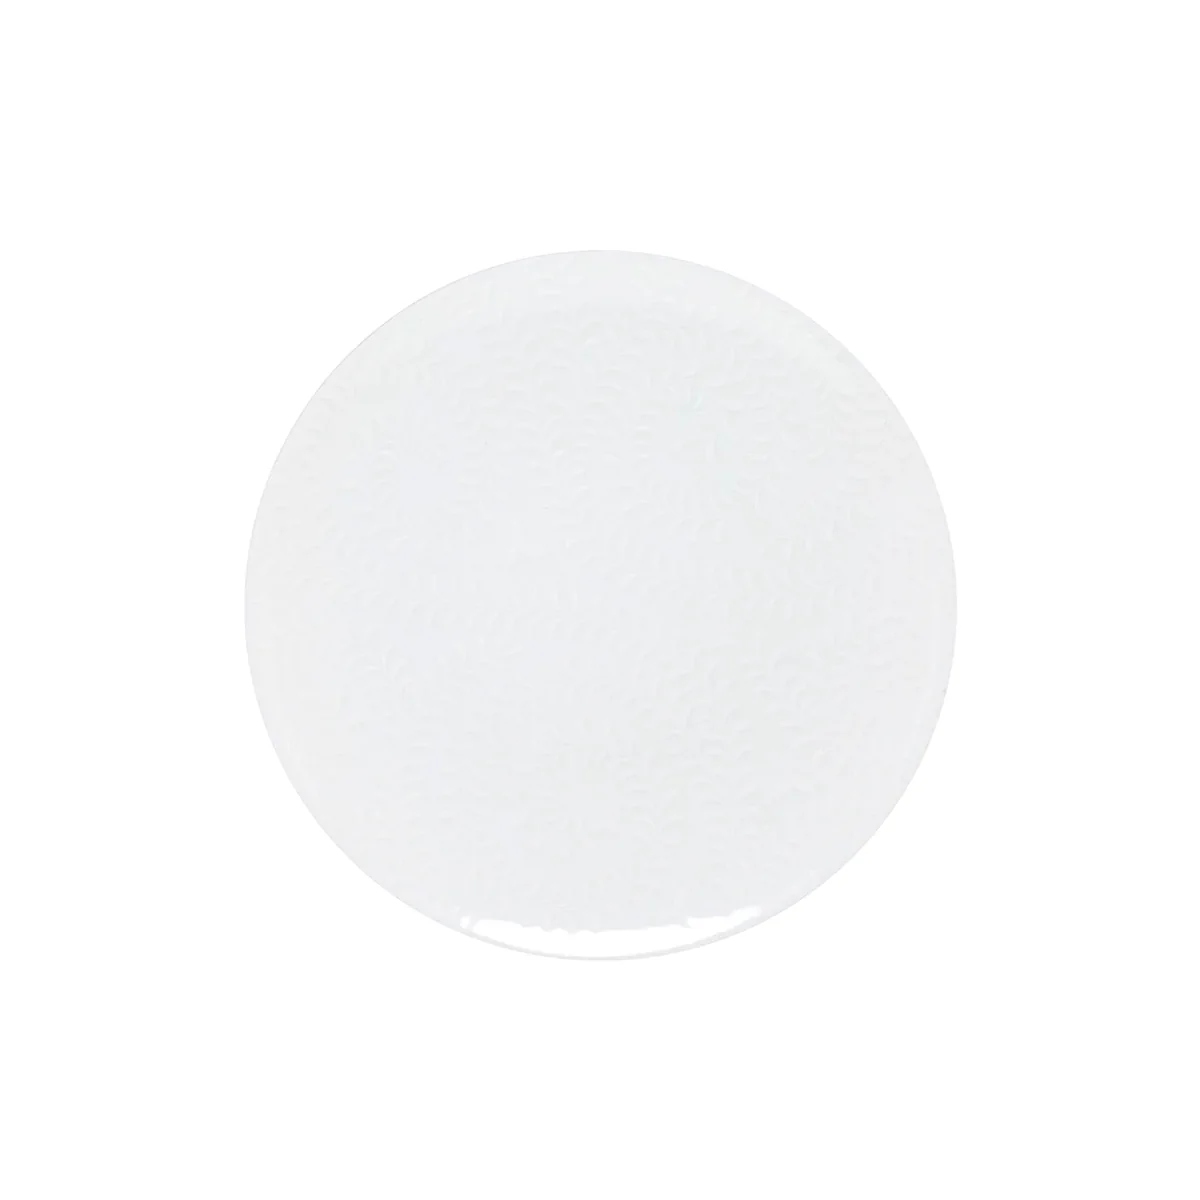 ARJUNA white on white - Dessert plate